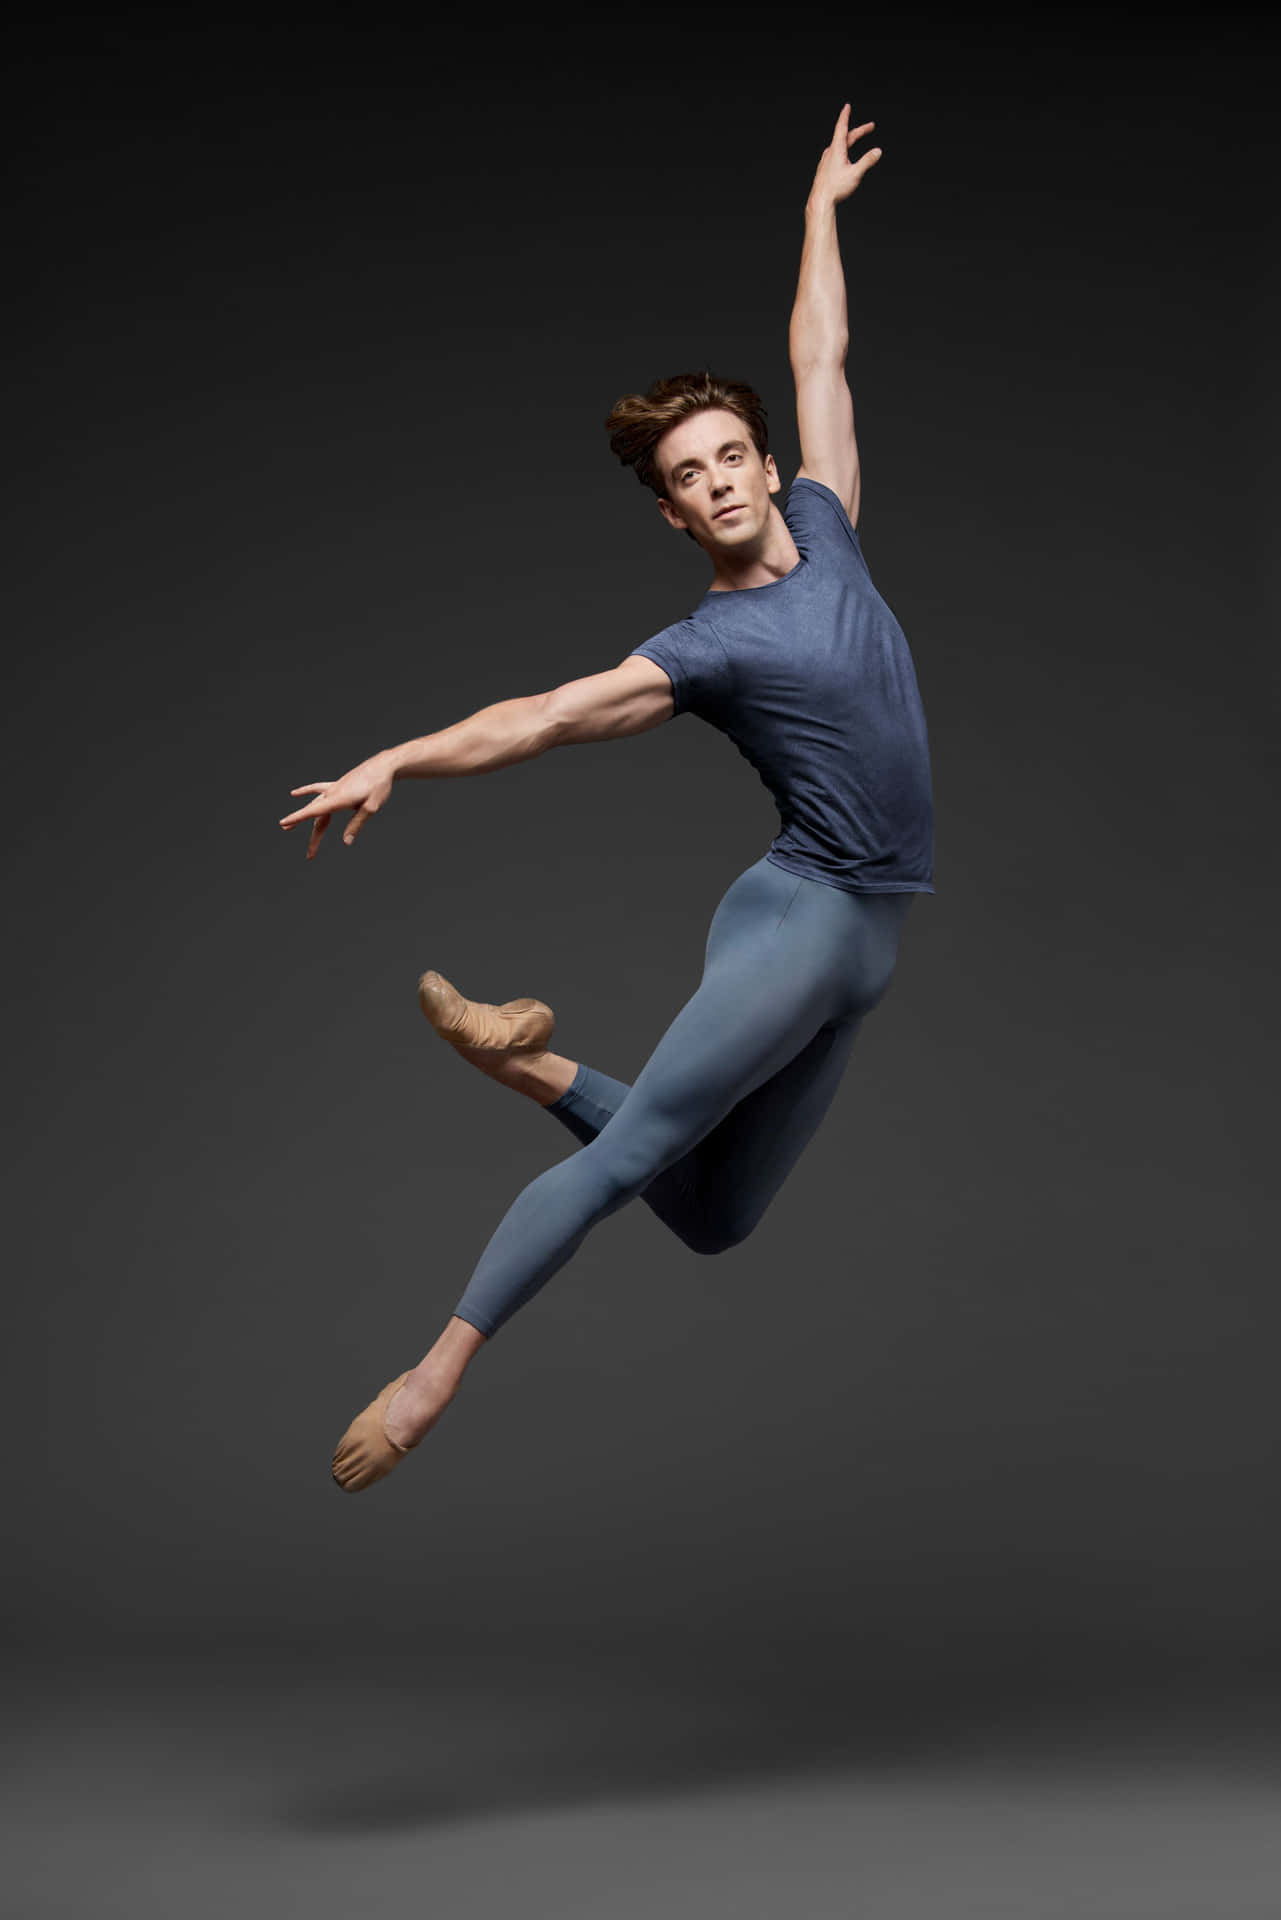 Male Ballet Dancer Jump-Shot Picture